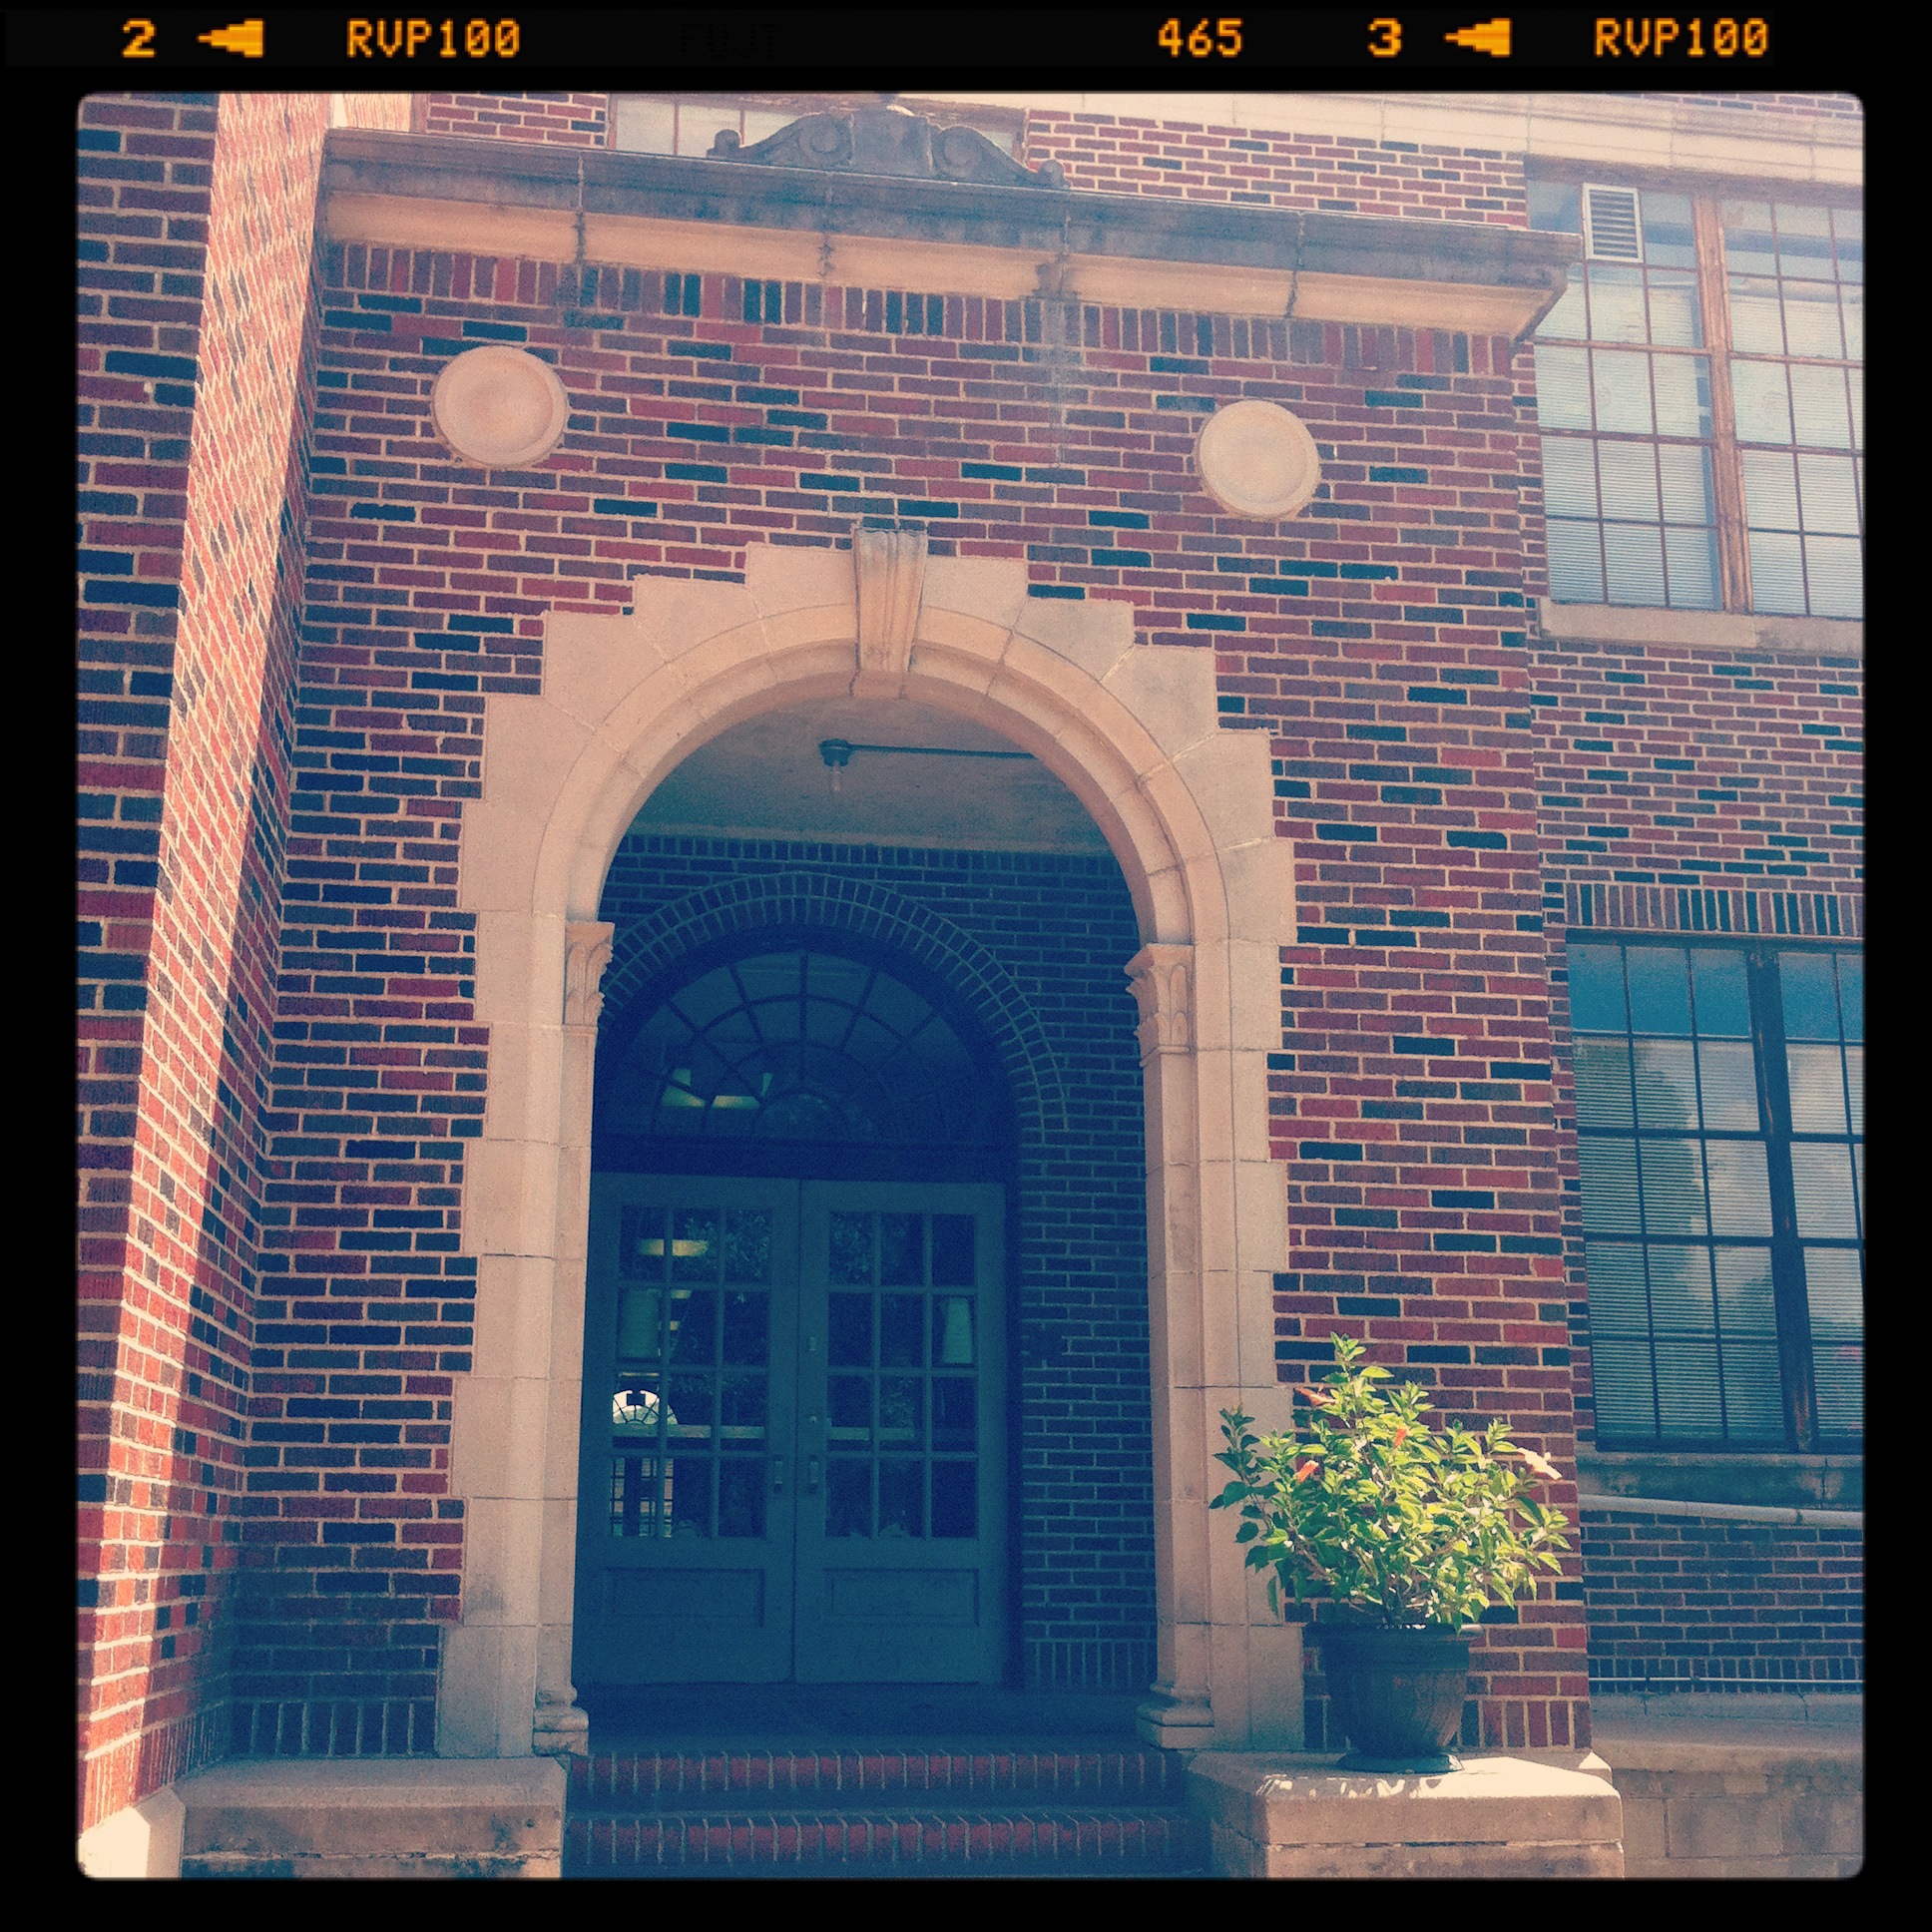 The door to the Brenham Education Building